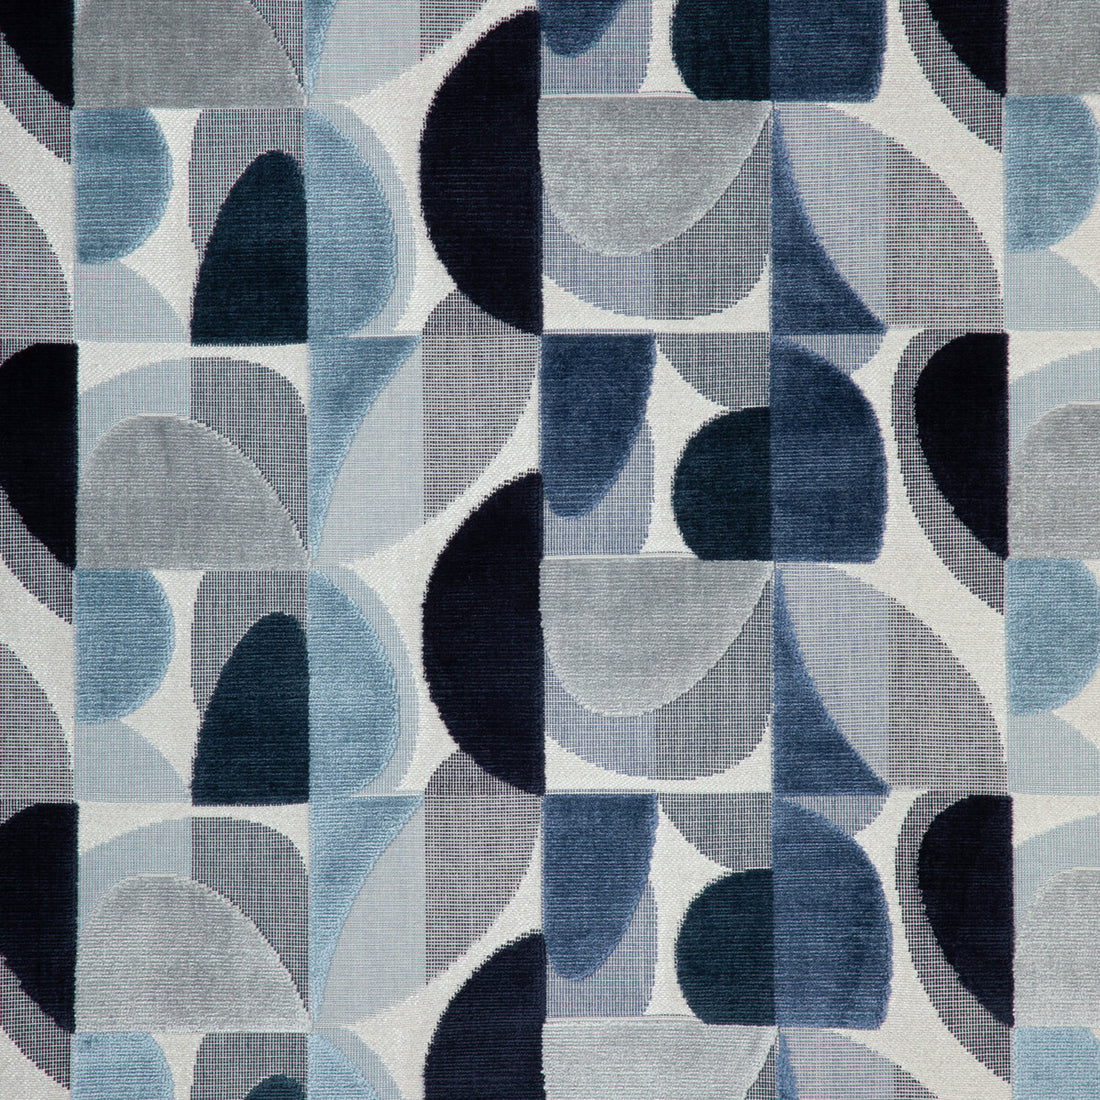 Kravet Design fabric in 36903-155 color - pattern 36903.155.0 - by Kravet Design in the Modern Velvets collection